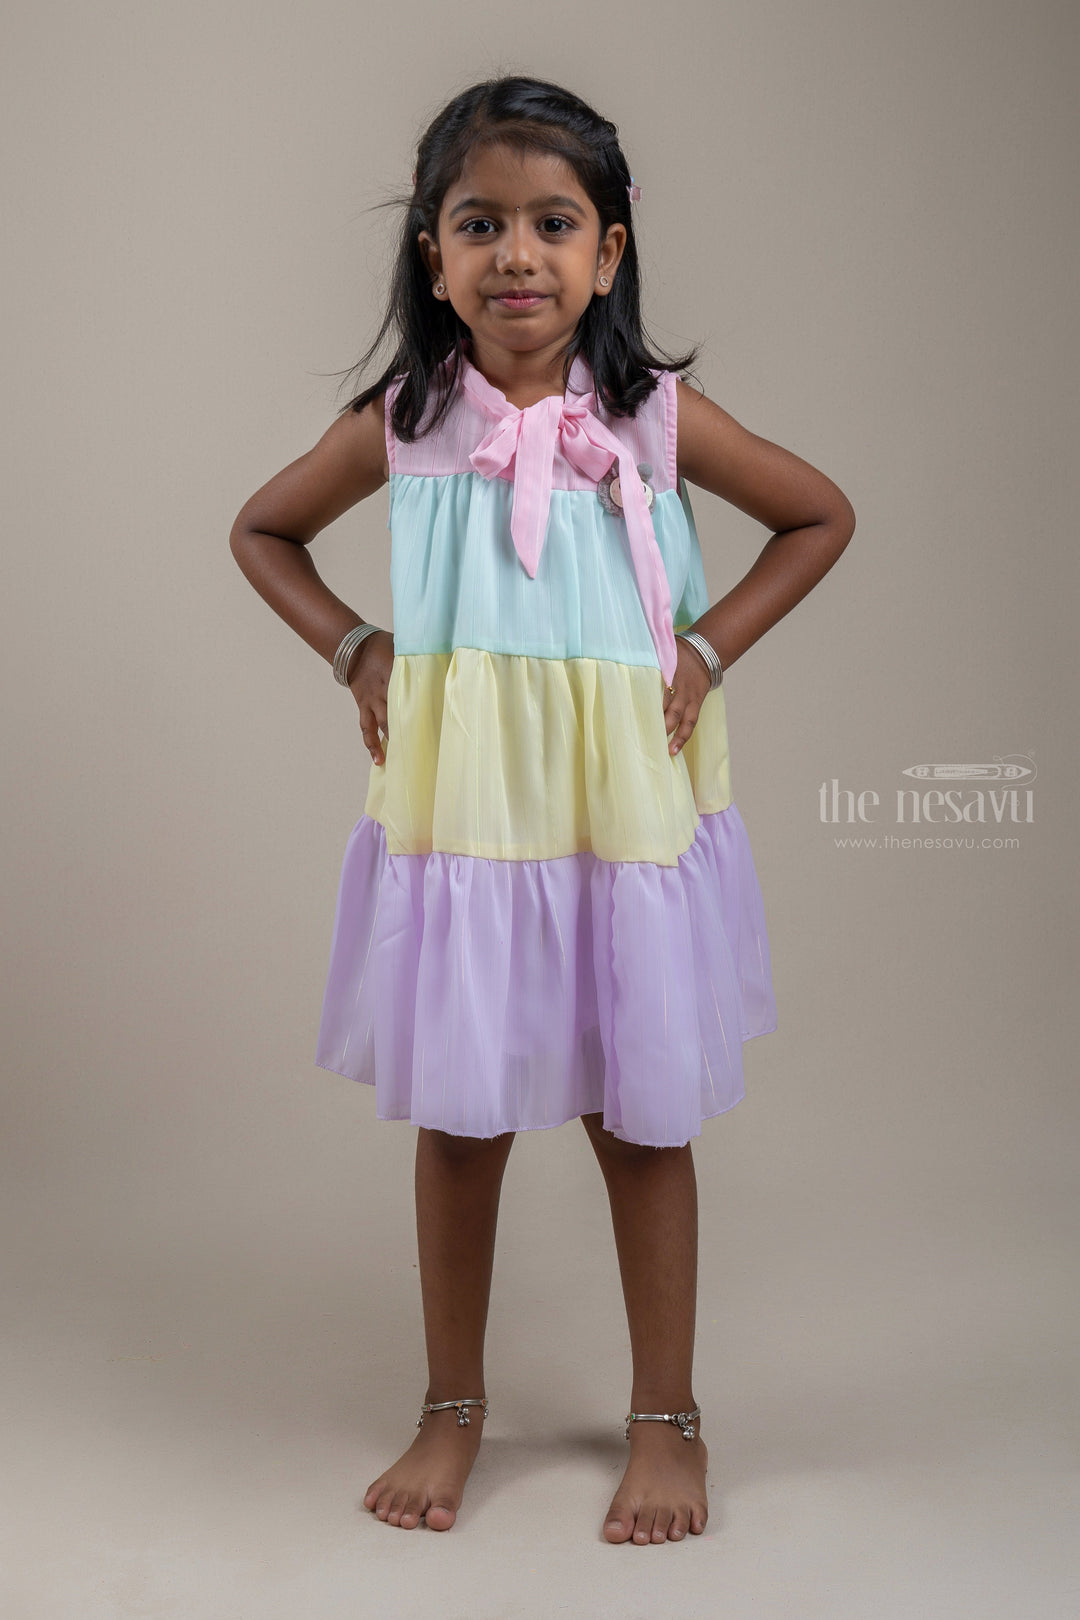 The Nesavu Frocks & Dresses Dazzling Multi-Colored Sleeveless Tiered Frock For Little Girls psr silks Nesavu 20 (3Y) / multicolor GFC1044A